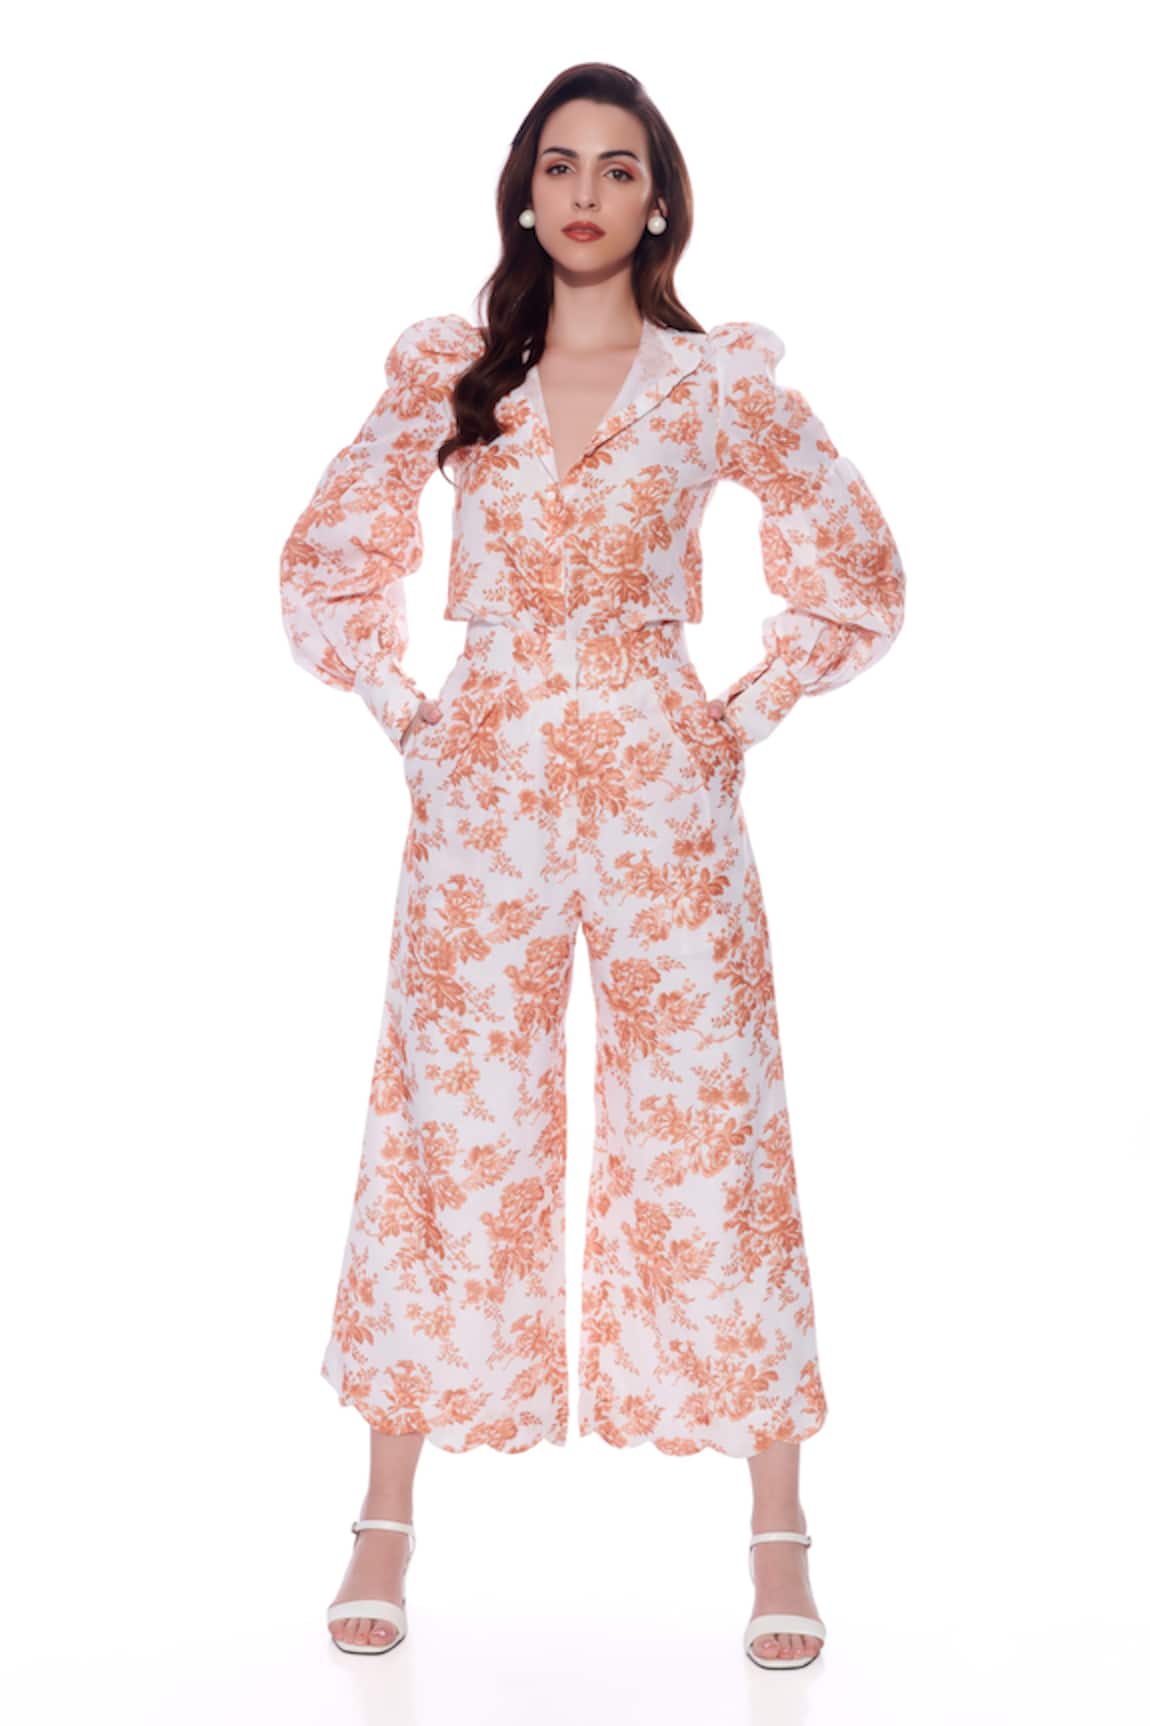 Verano by Tanya Magnolia Floral Print Linen Trouser